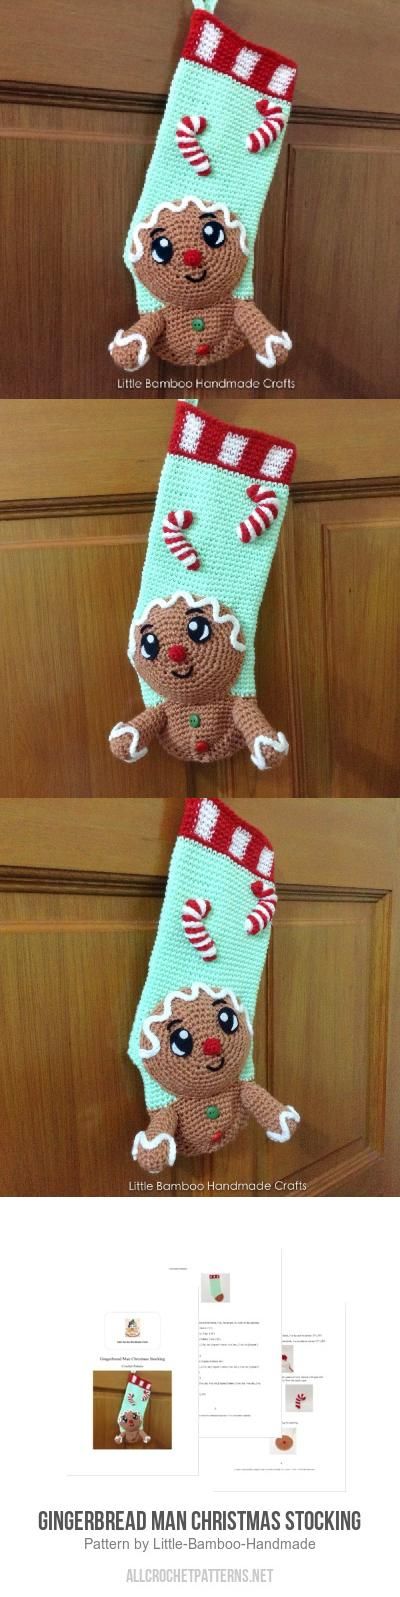 Gingerbread-Man-Christmas-Stocking-crochet-pattern.jpg